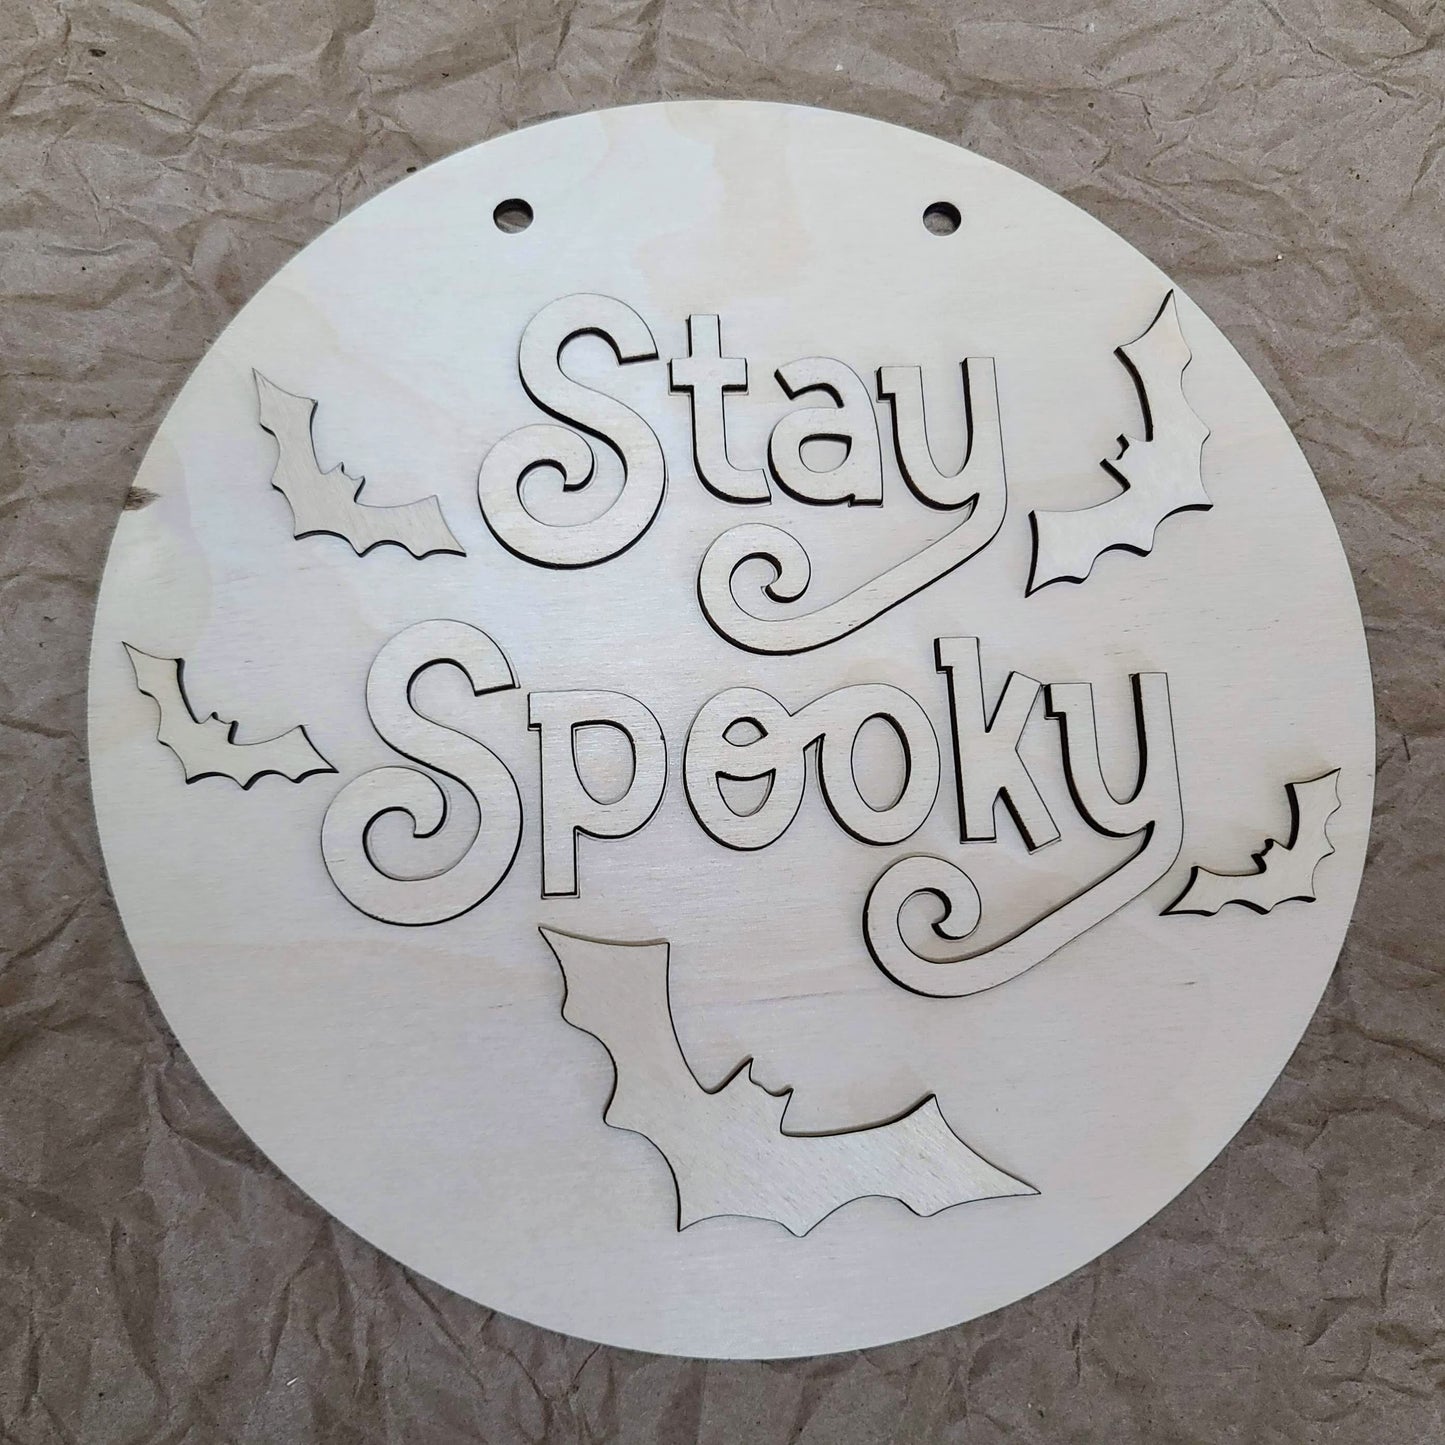 Halloween DIY Sign Kit - Stay Spooky - Bats